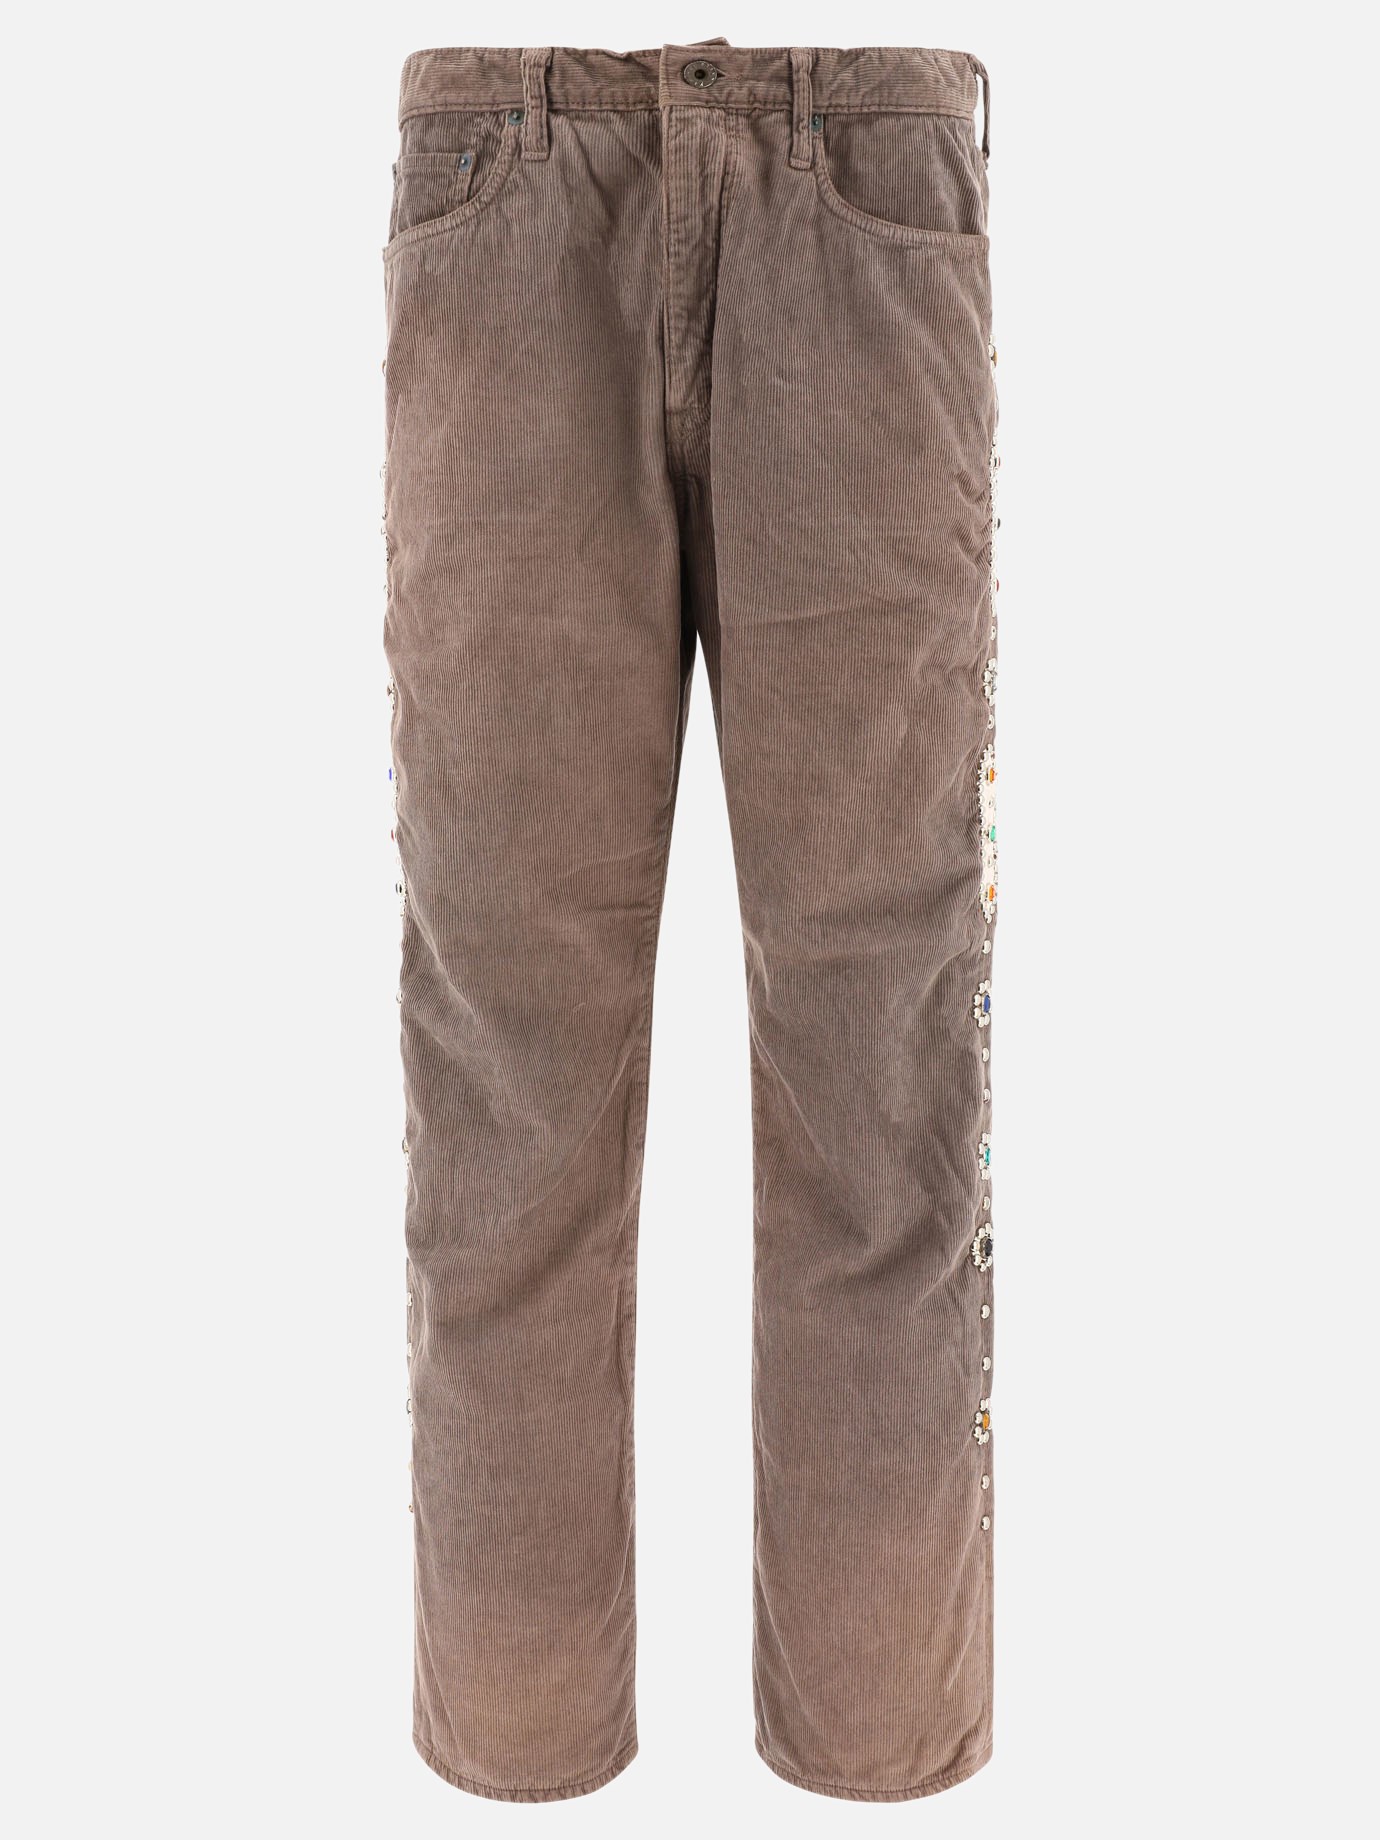 Corduroy trousers with rhinestones